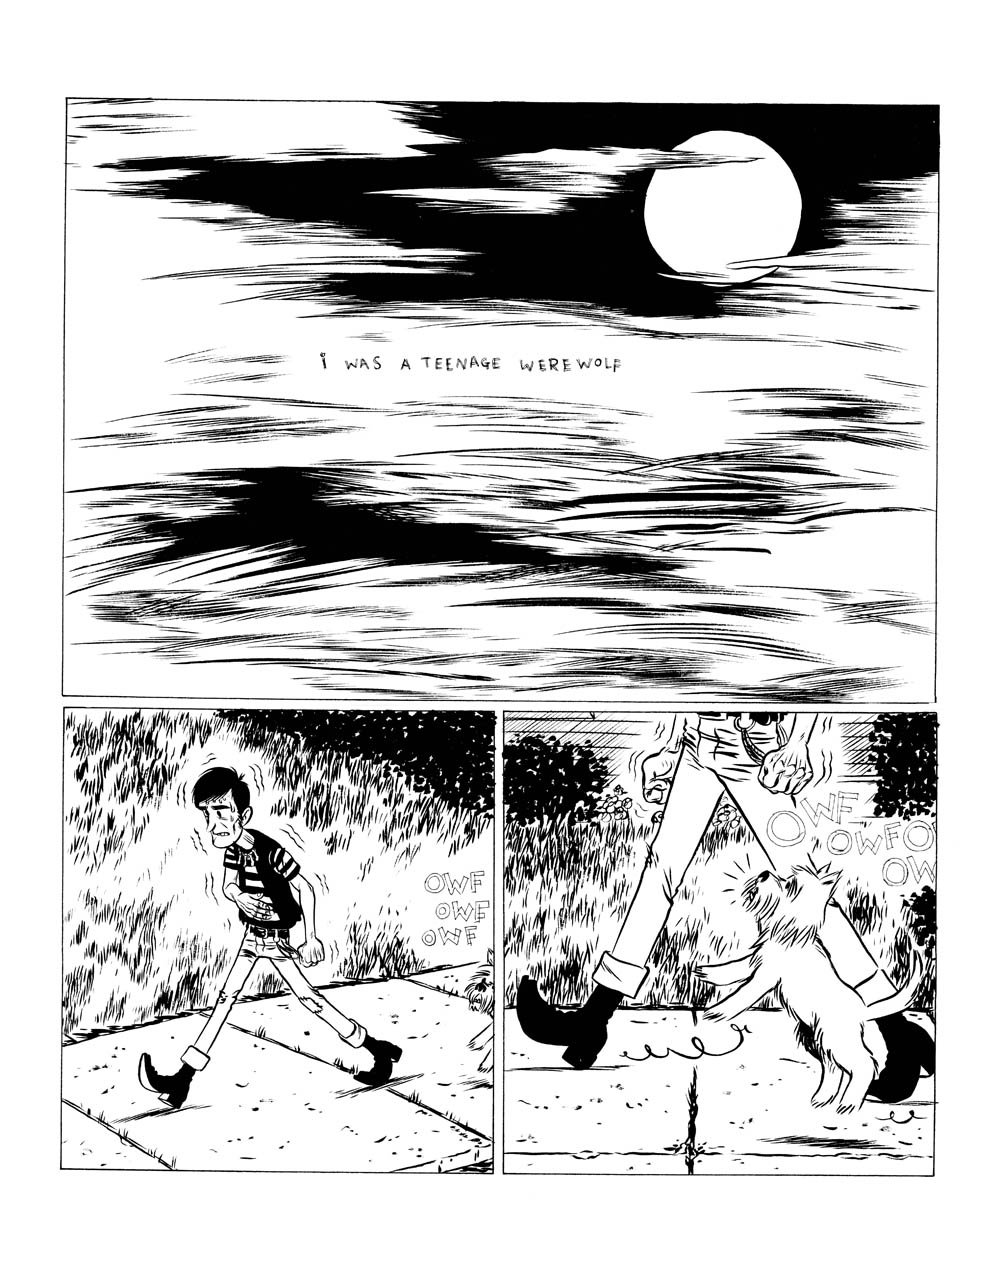 Teenage Werewolf - page 2